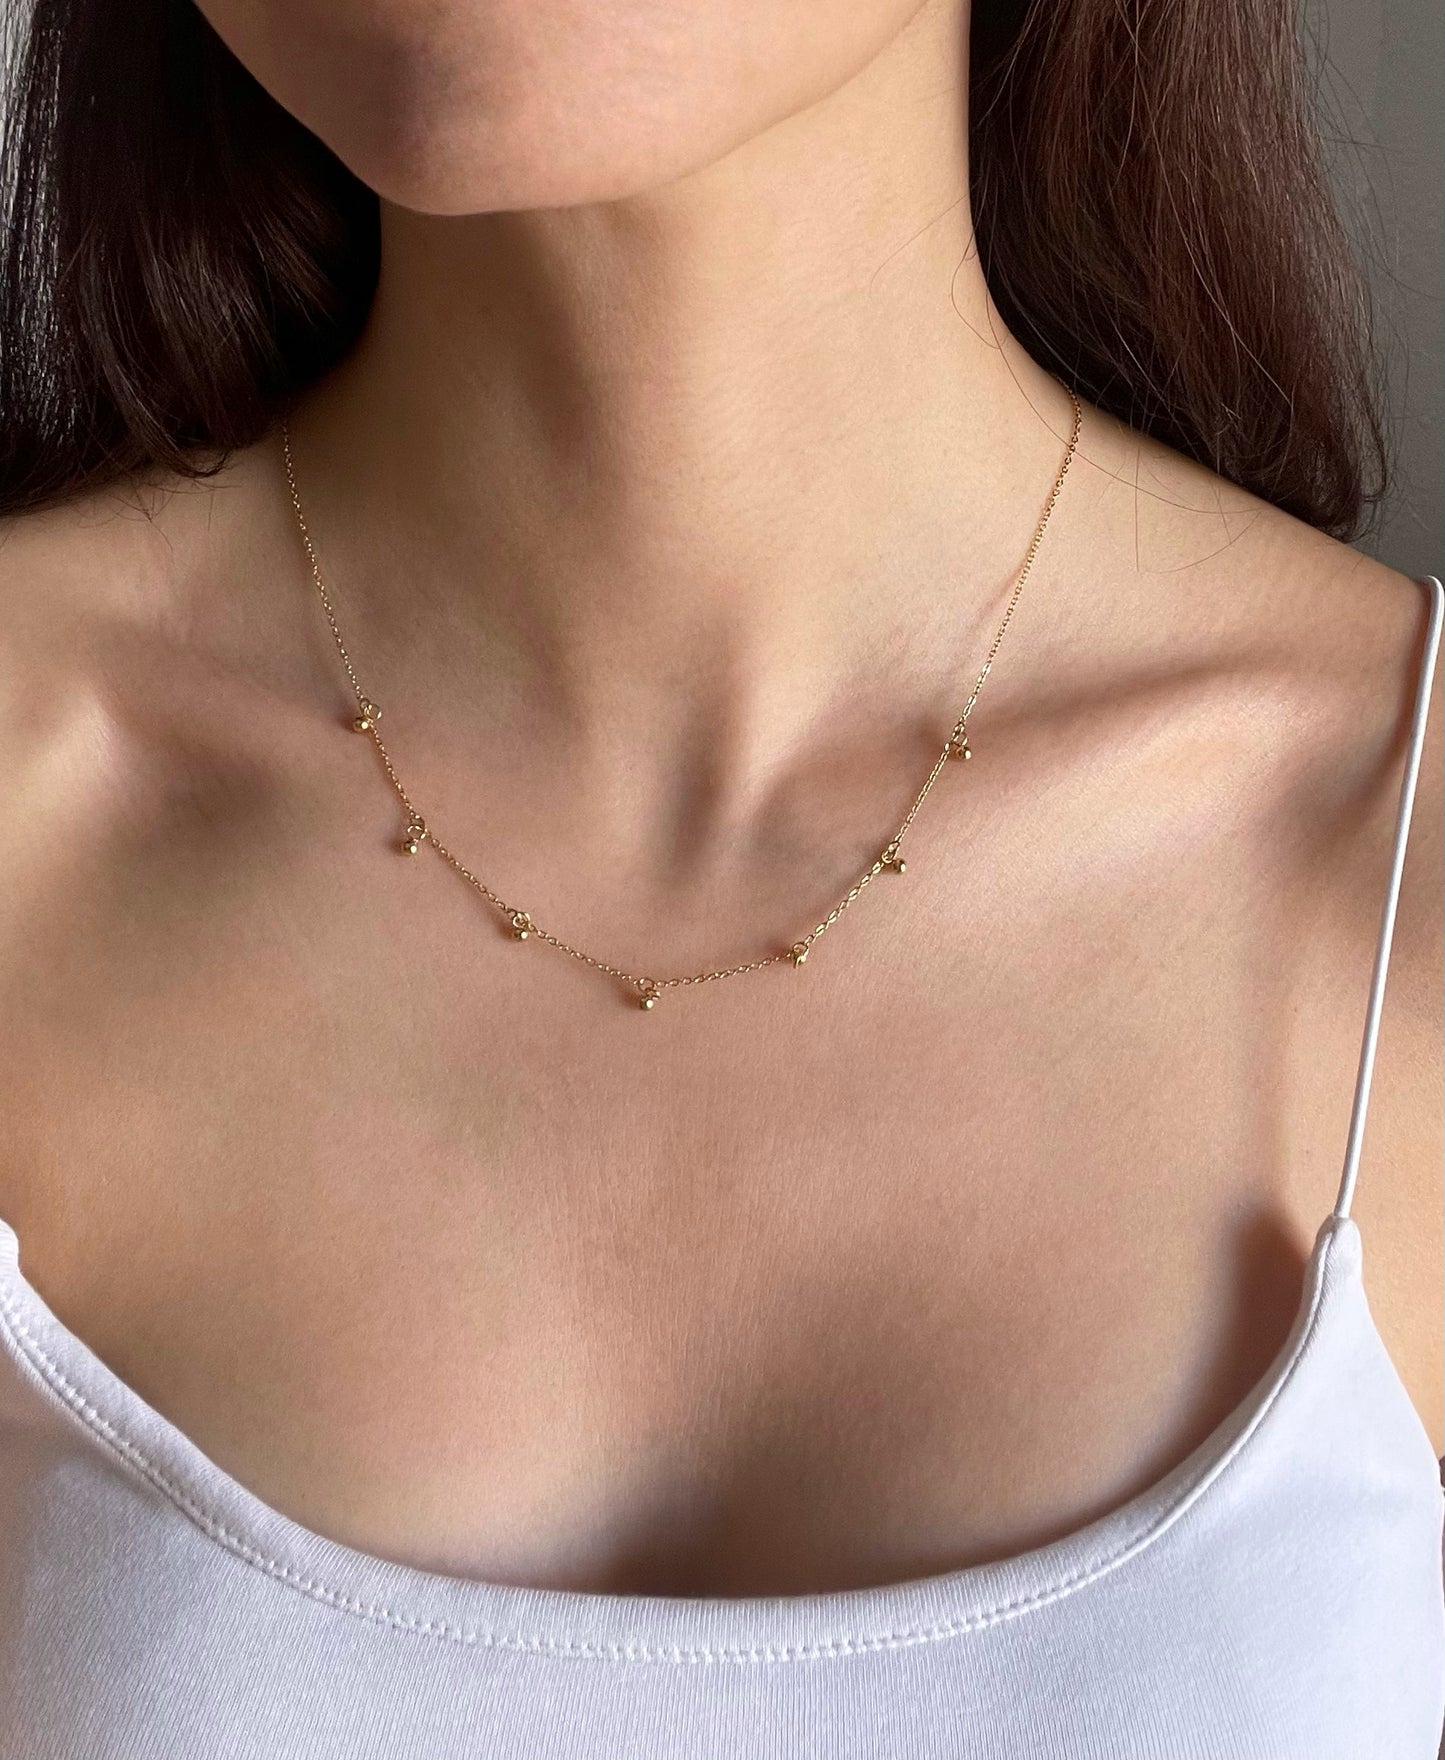 Selena necklace